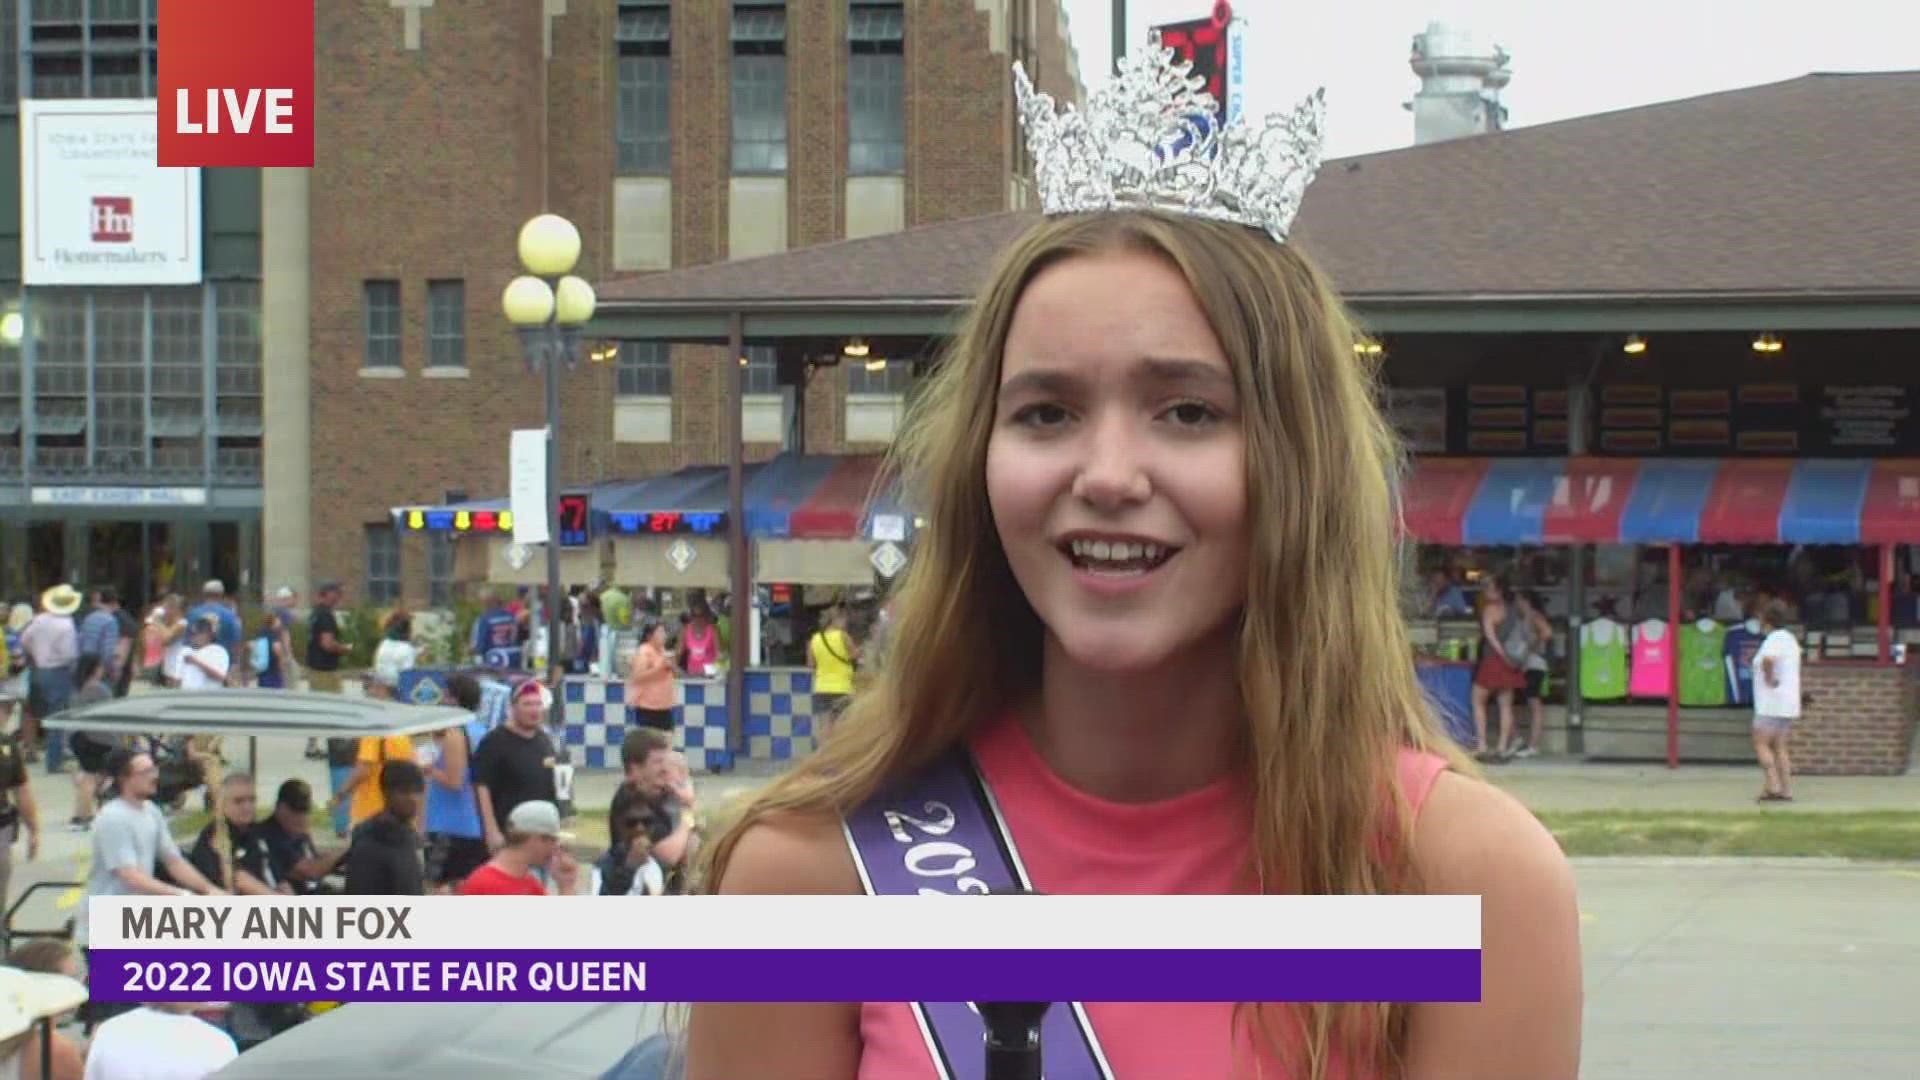 Fox will serve as Fair Queen until the next Iowa State Fair, which will take place Aug. 10-20, 2023.